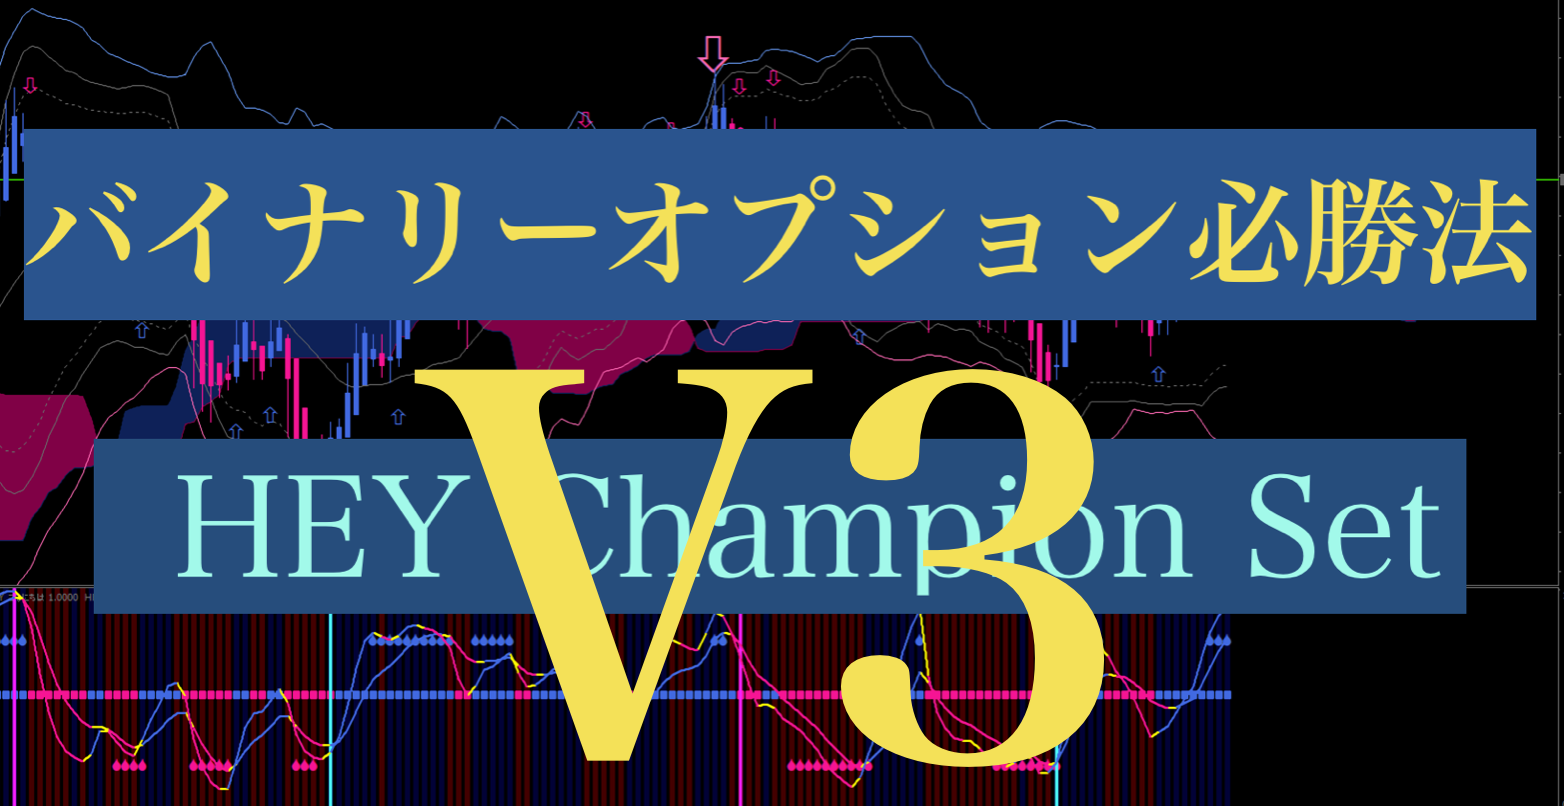 Hey_Champion_Set_V3+.png